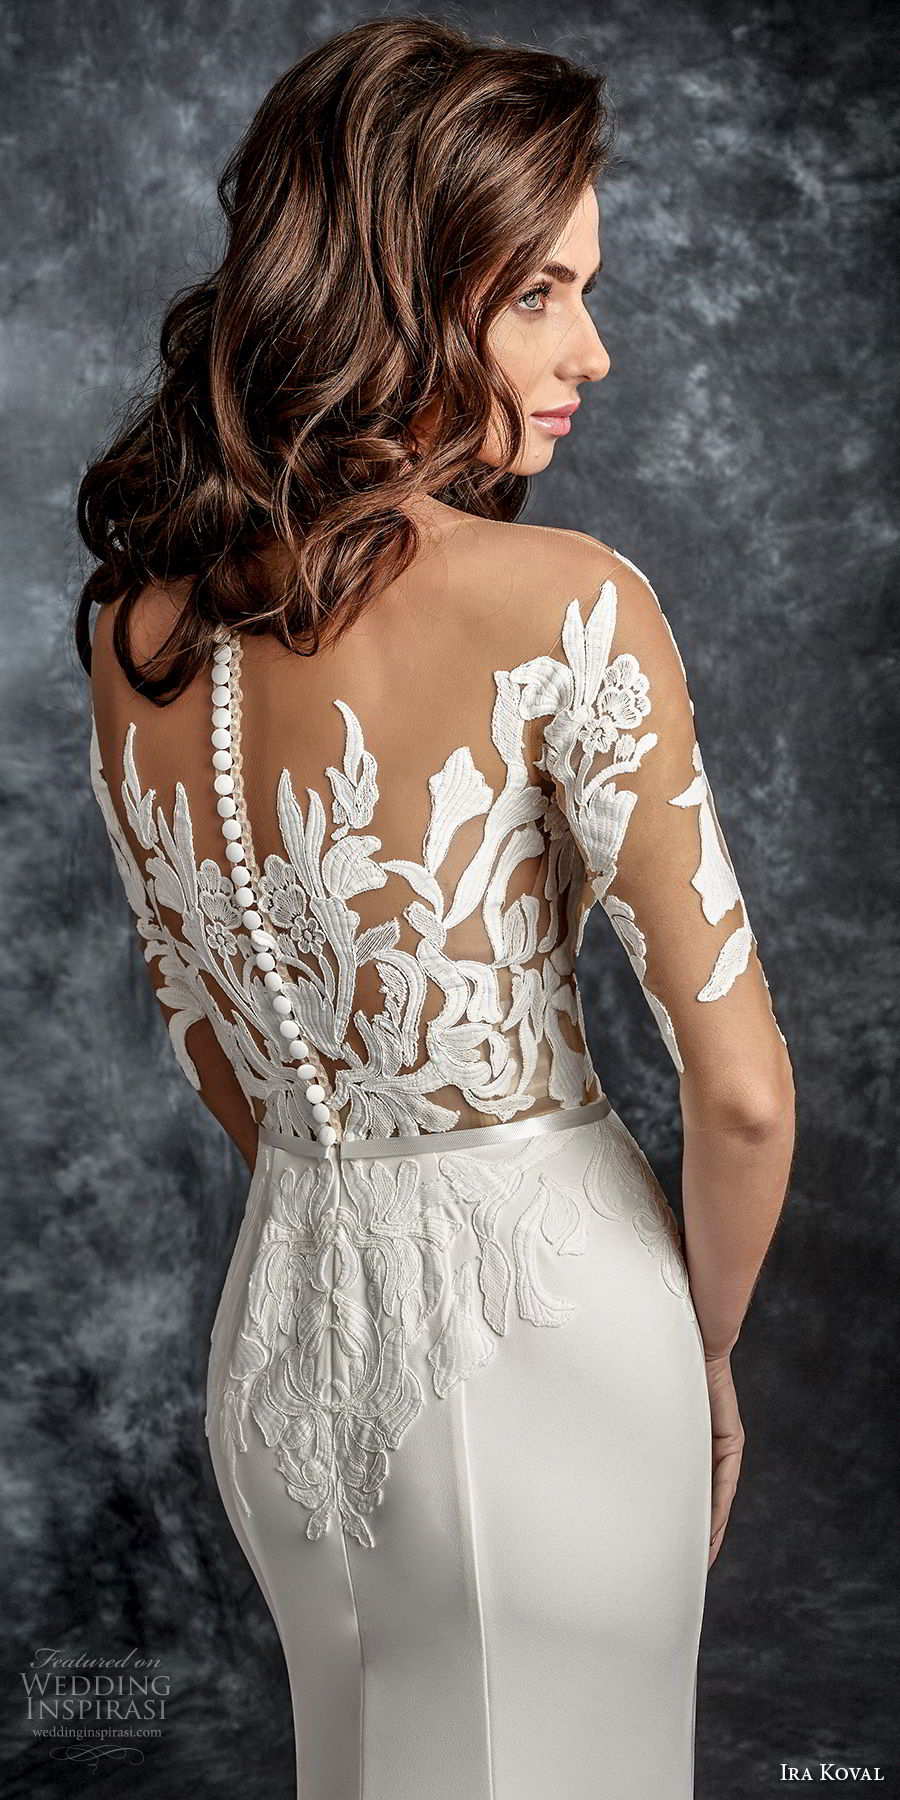 ira koval 2017 bridal half sleeves illusion floral neckline heavily embellished elegant sheath wedding dress lace button back medium train (617) zbv